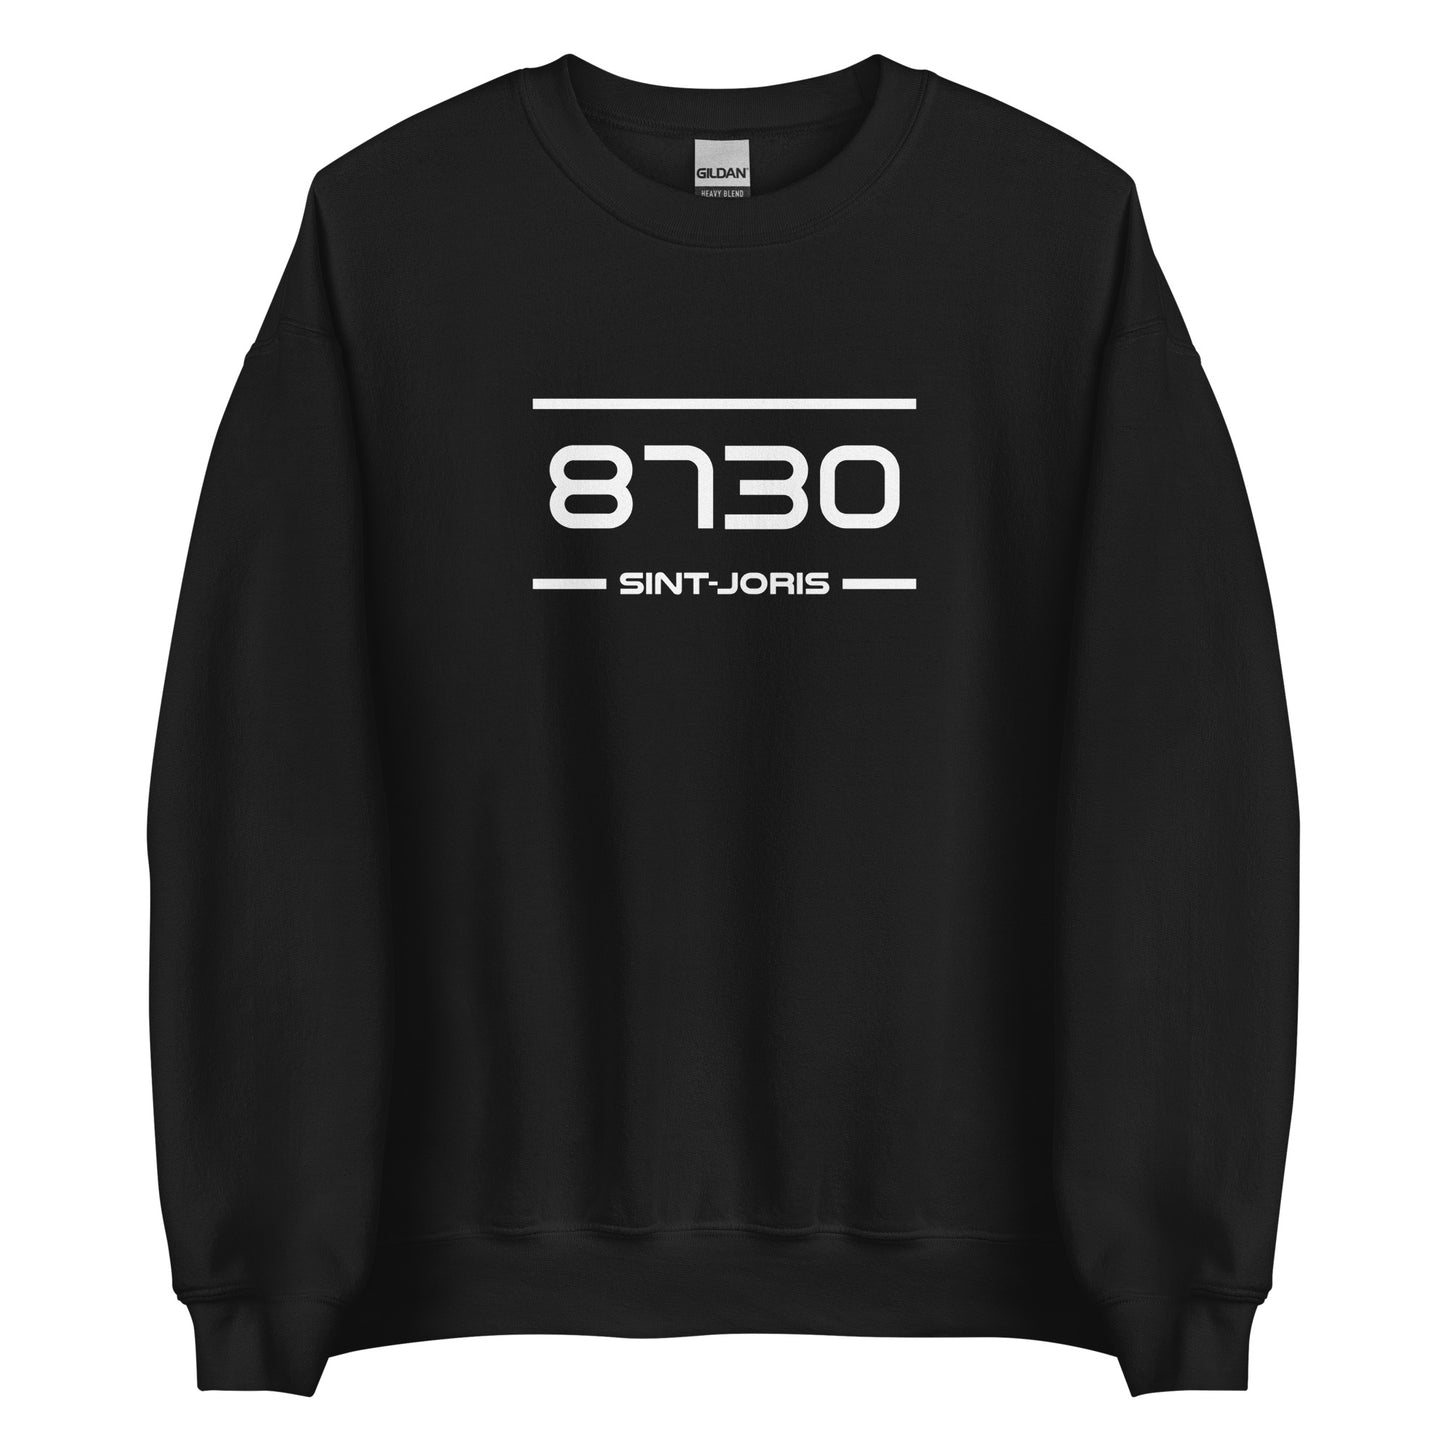 Sweater - 8730 - Sint-Joris (M/V)